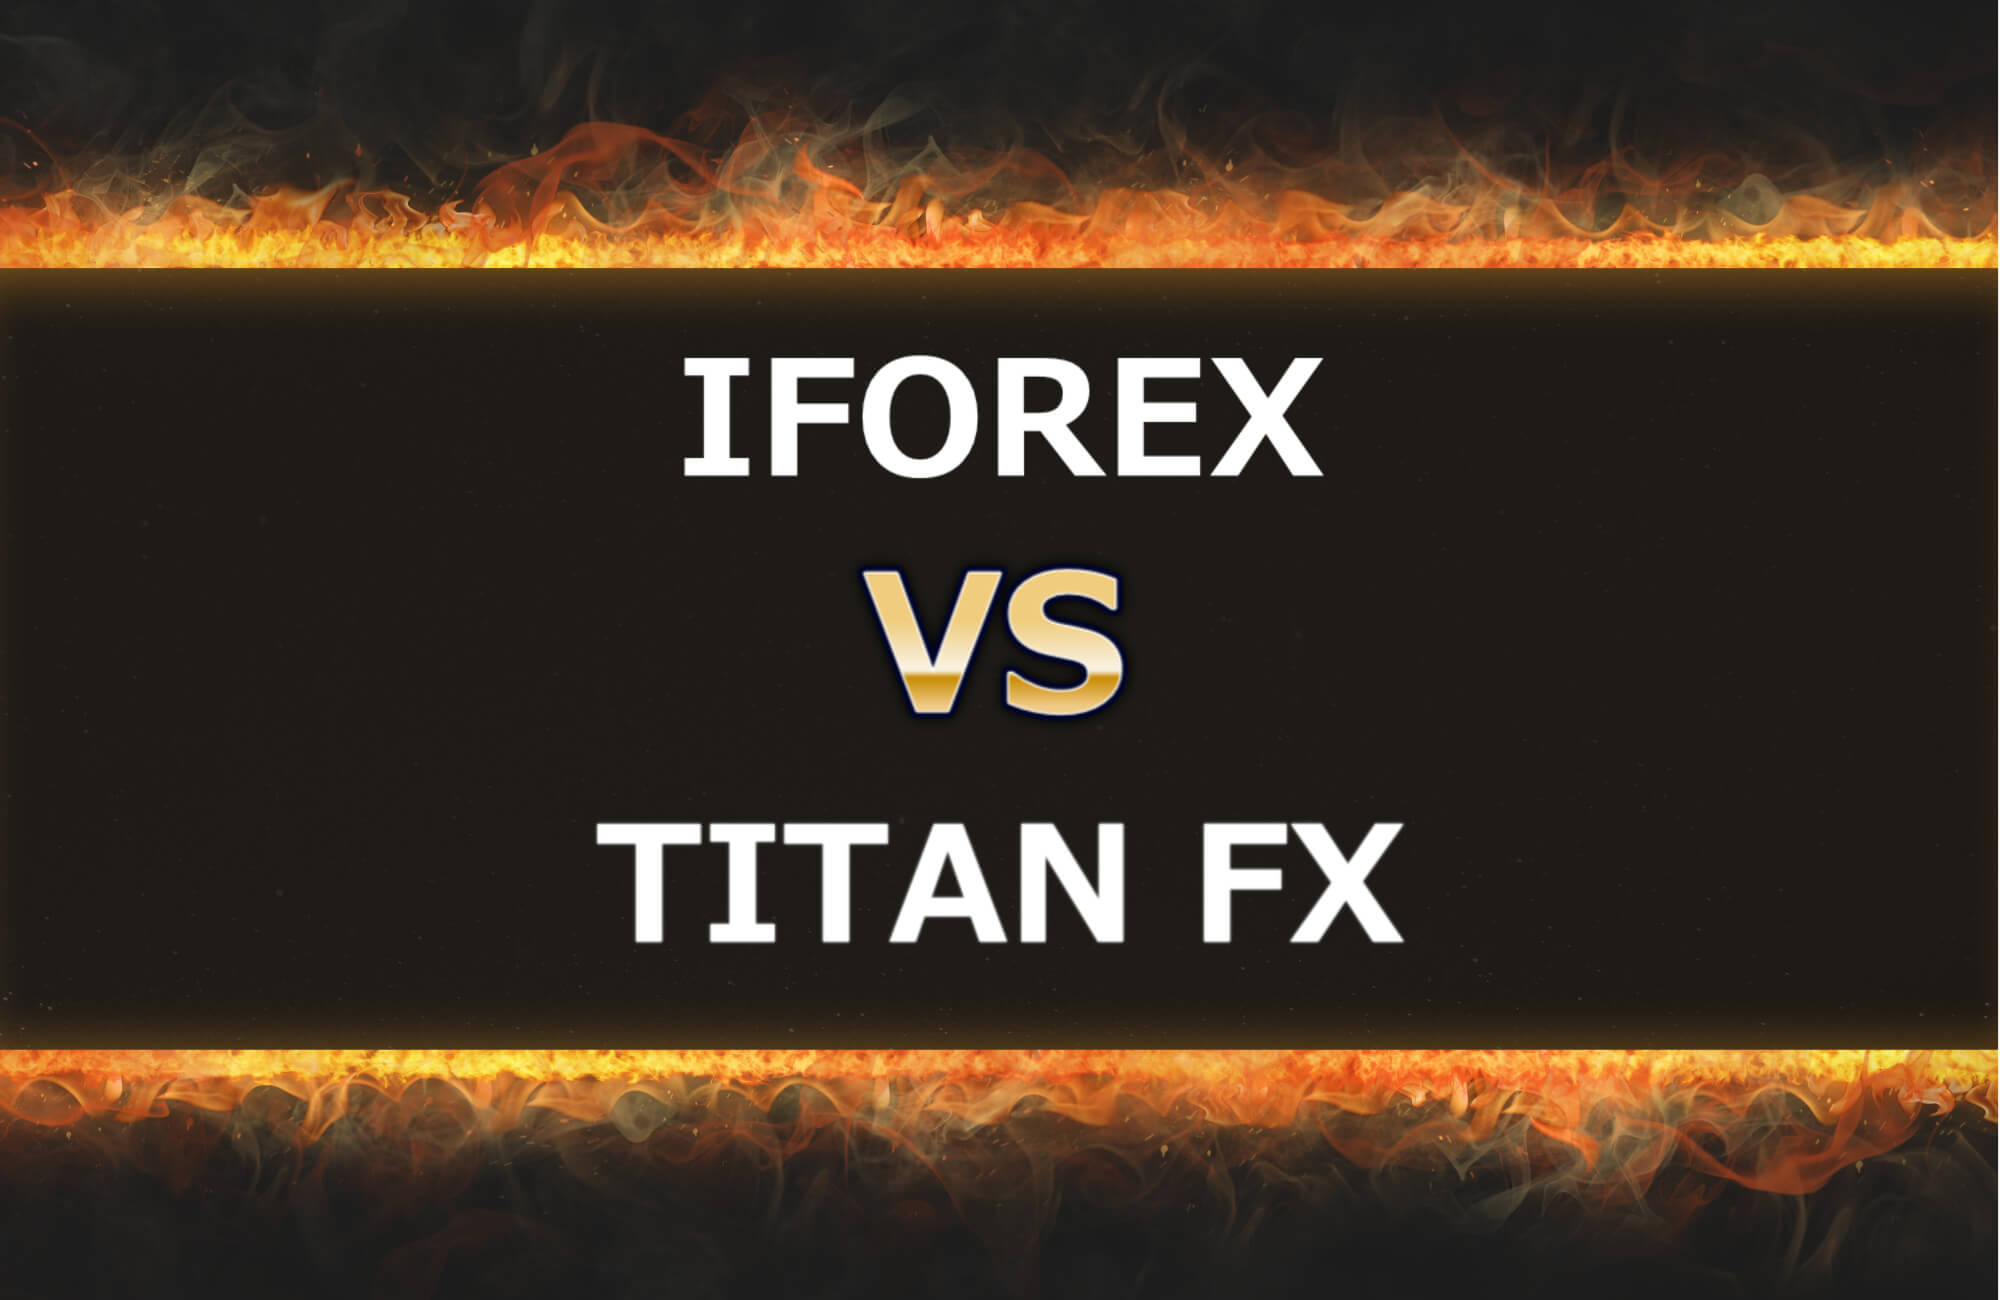 IFOREXとTITAN FXを8つの項目で比較